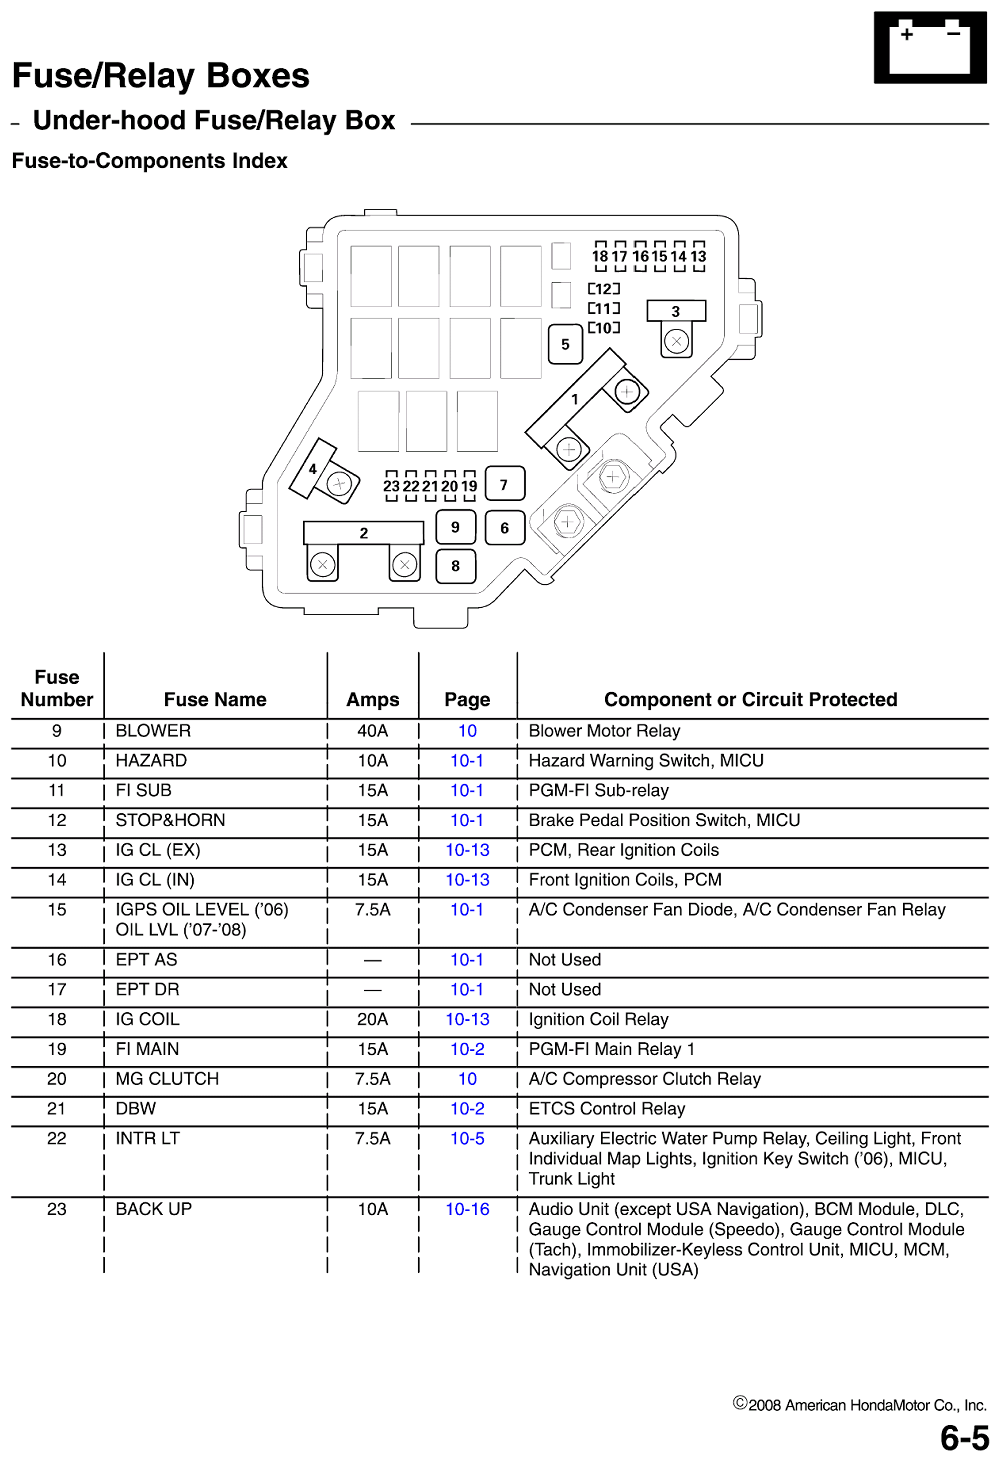 Wiring Diagram : 1997 Civic Fuse Box Diagram. 1997 Civic Fuse Box